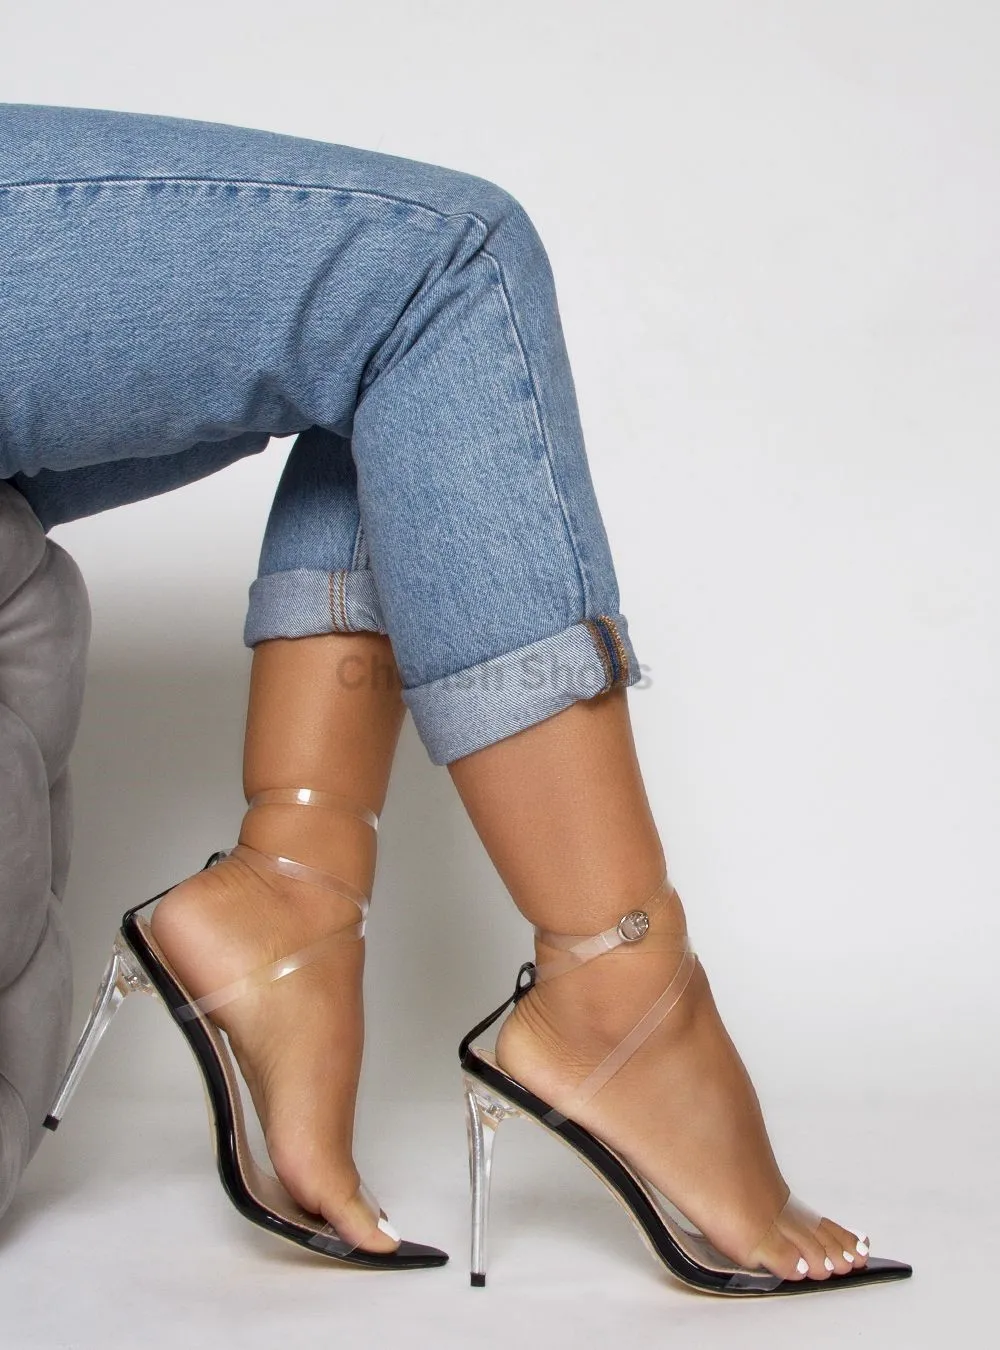 translucent stiletto heels